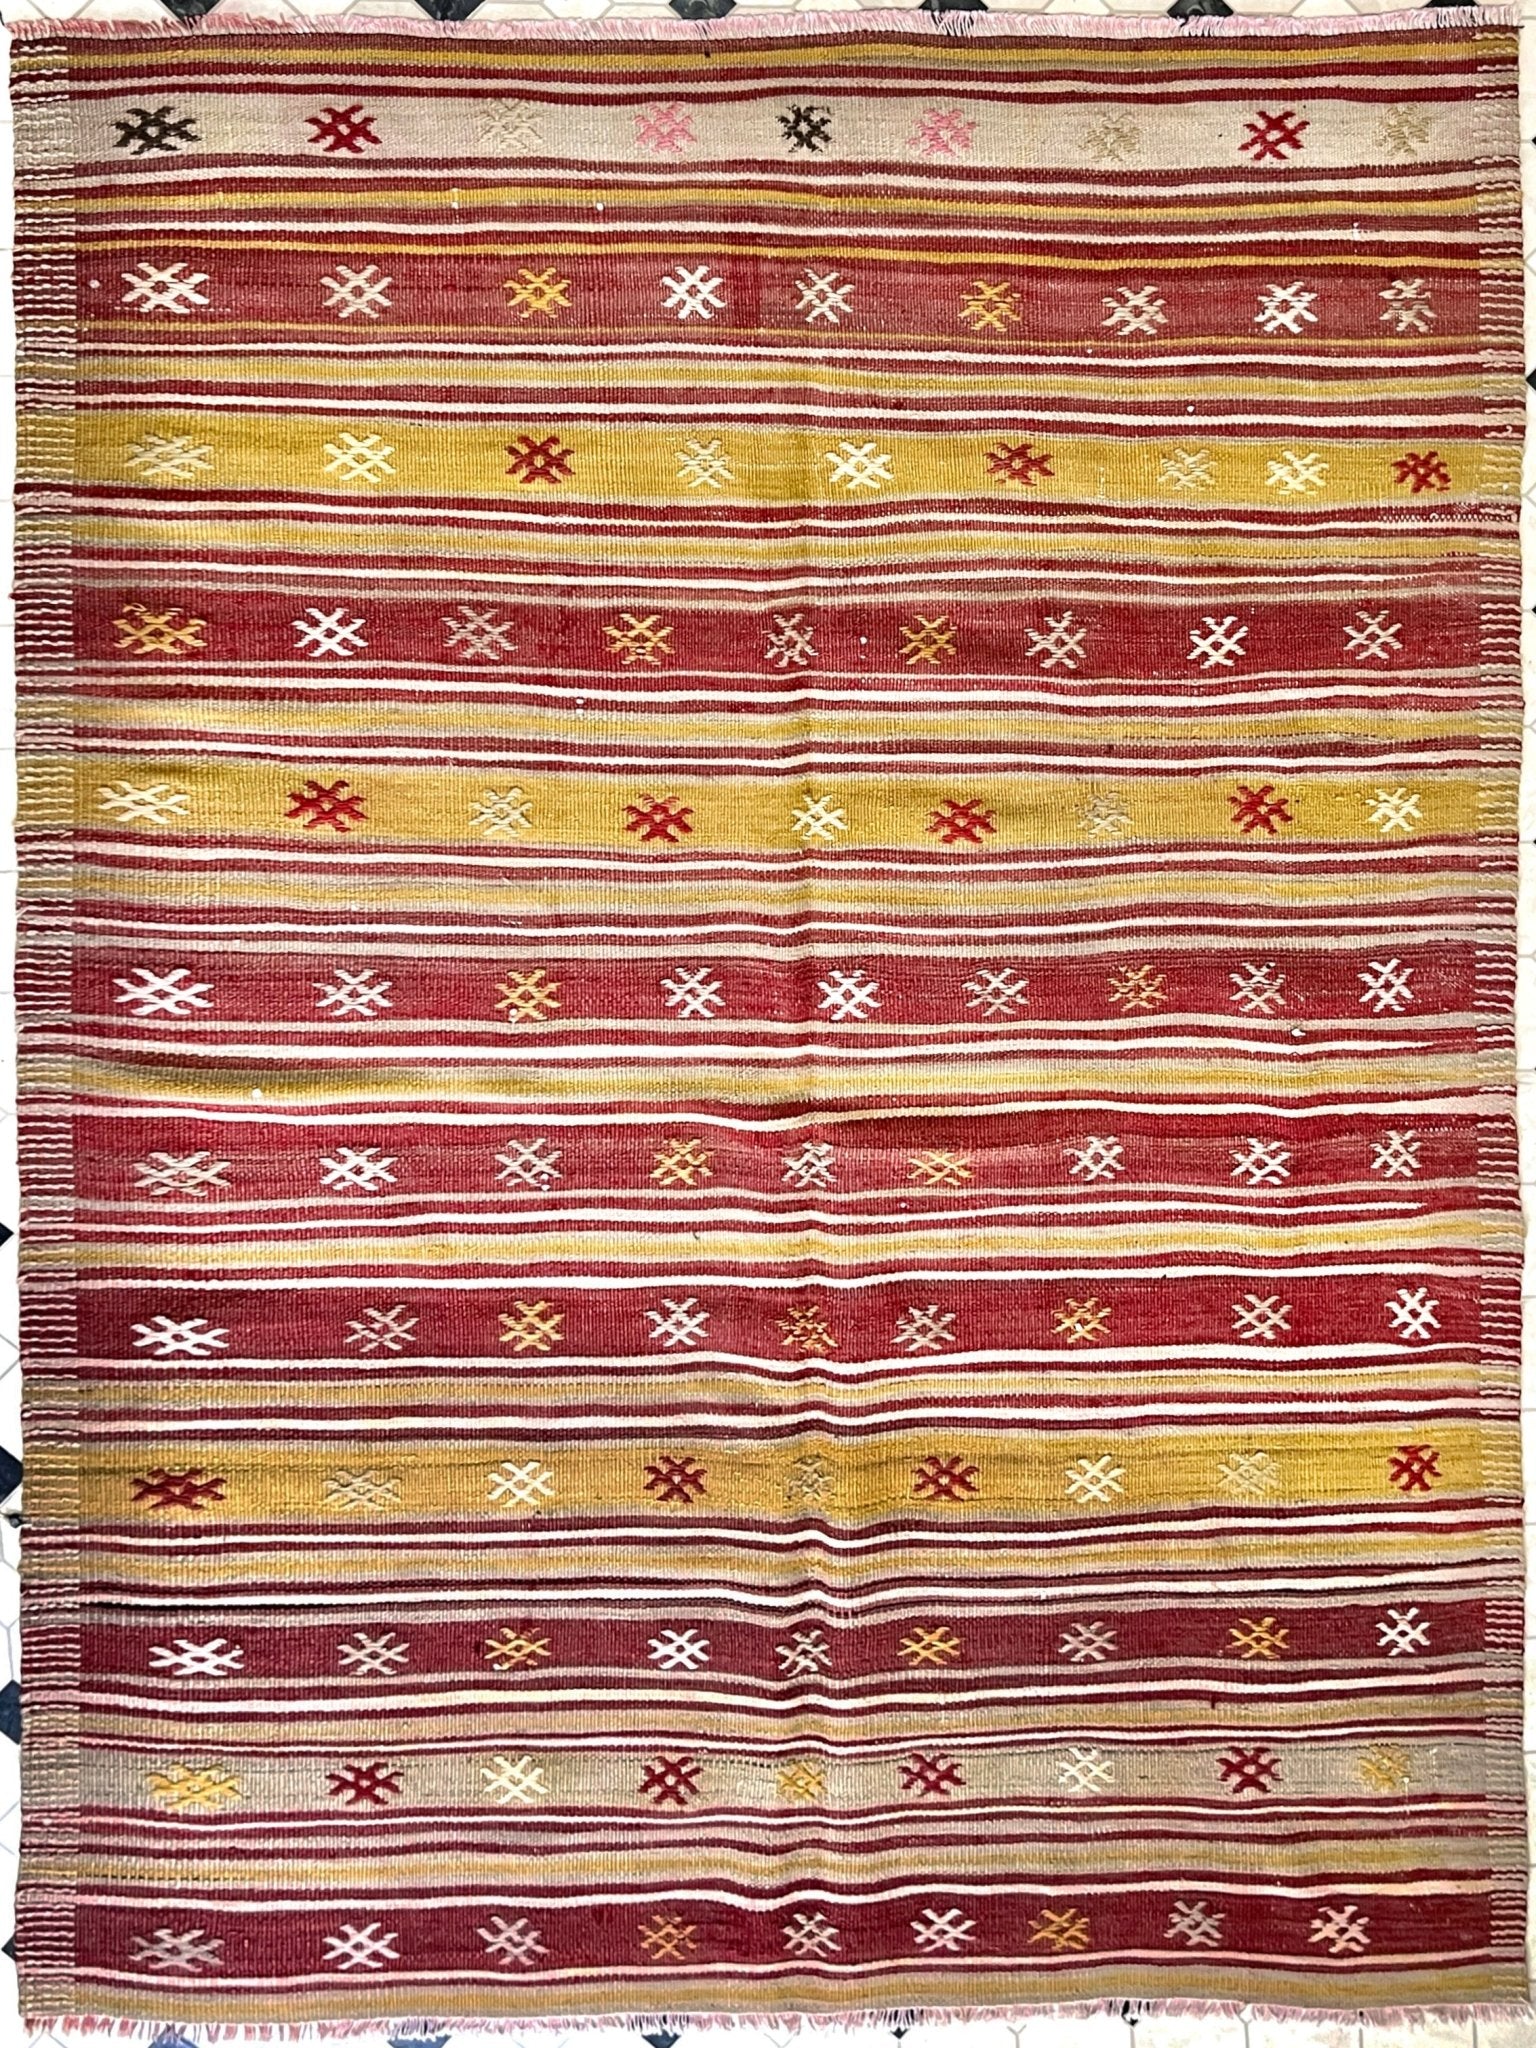 Pergamum Vintage Turkish Kilim rug shop berkeley. Oriental rug shop los gatos, palo alto. Buy Turkish kilim rug online